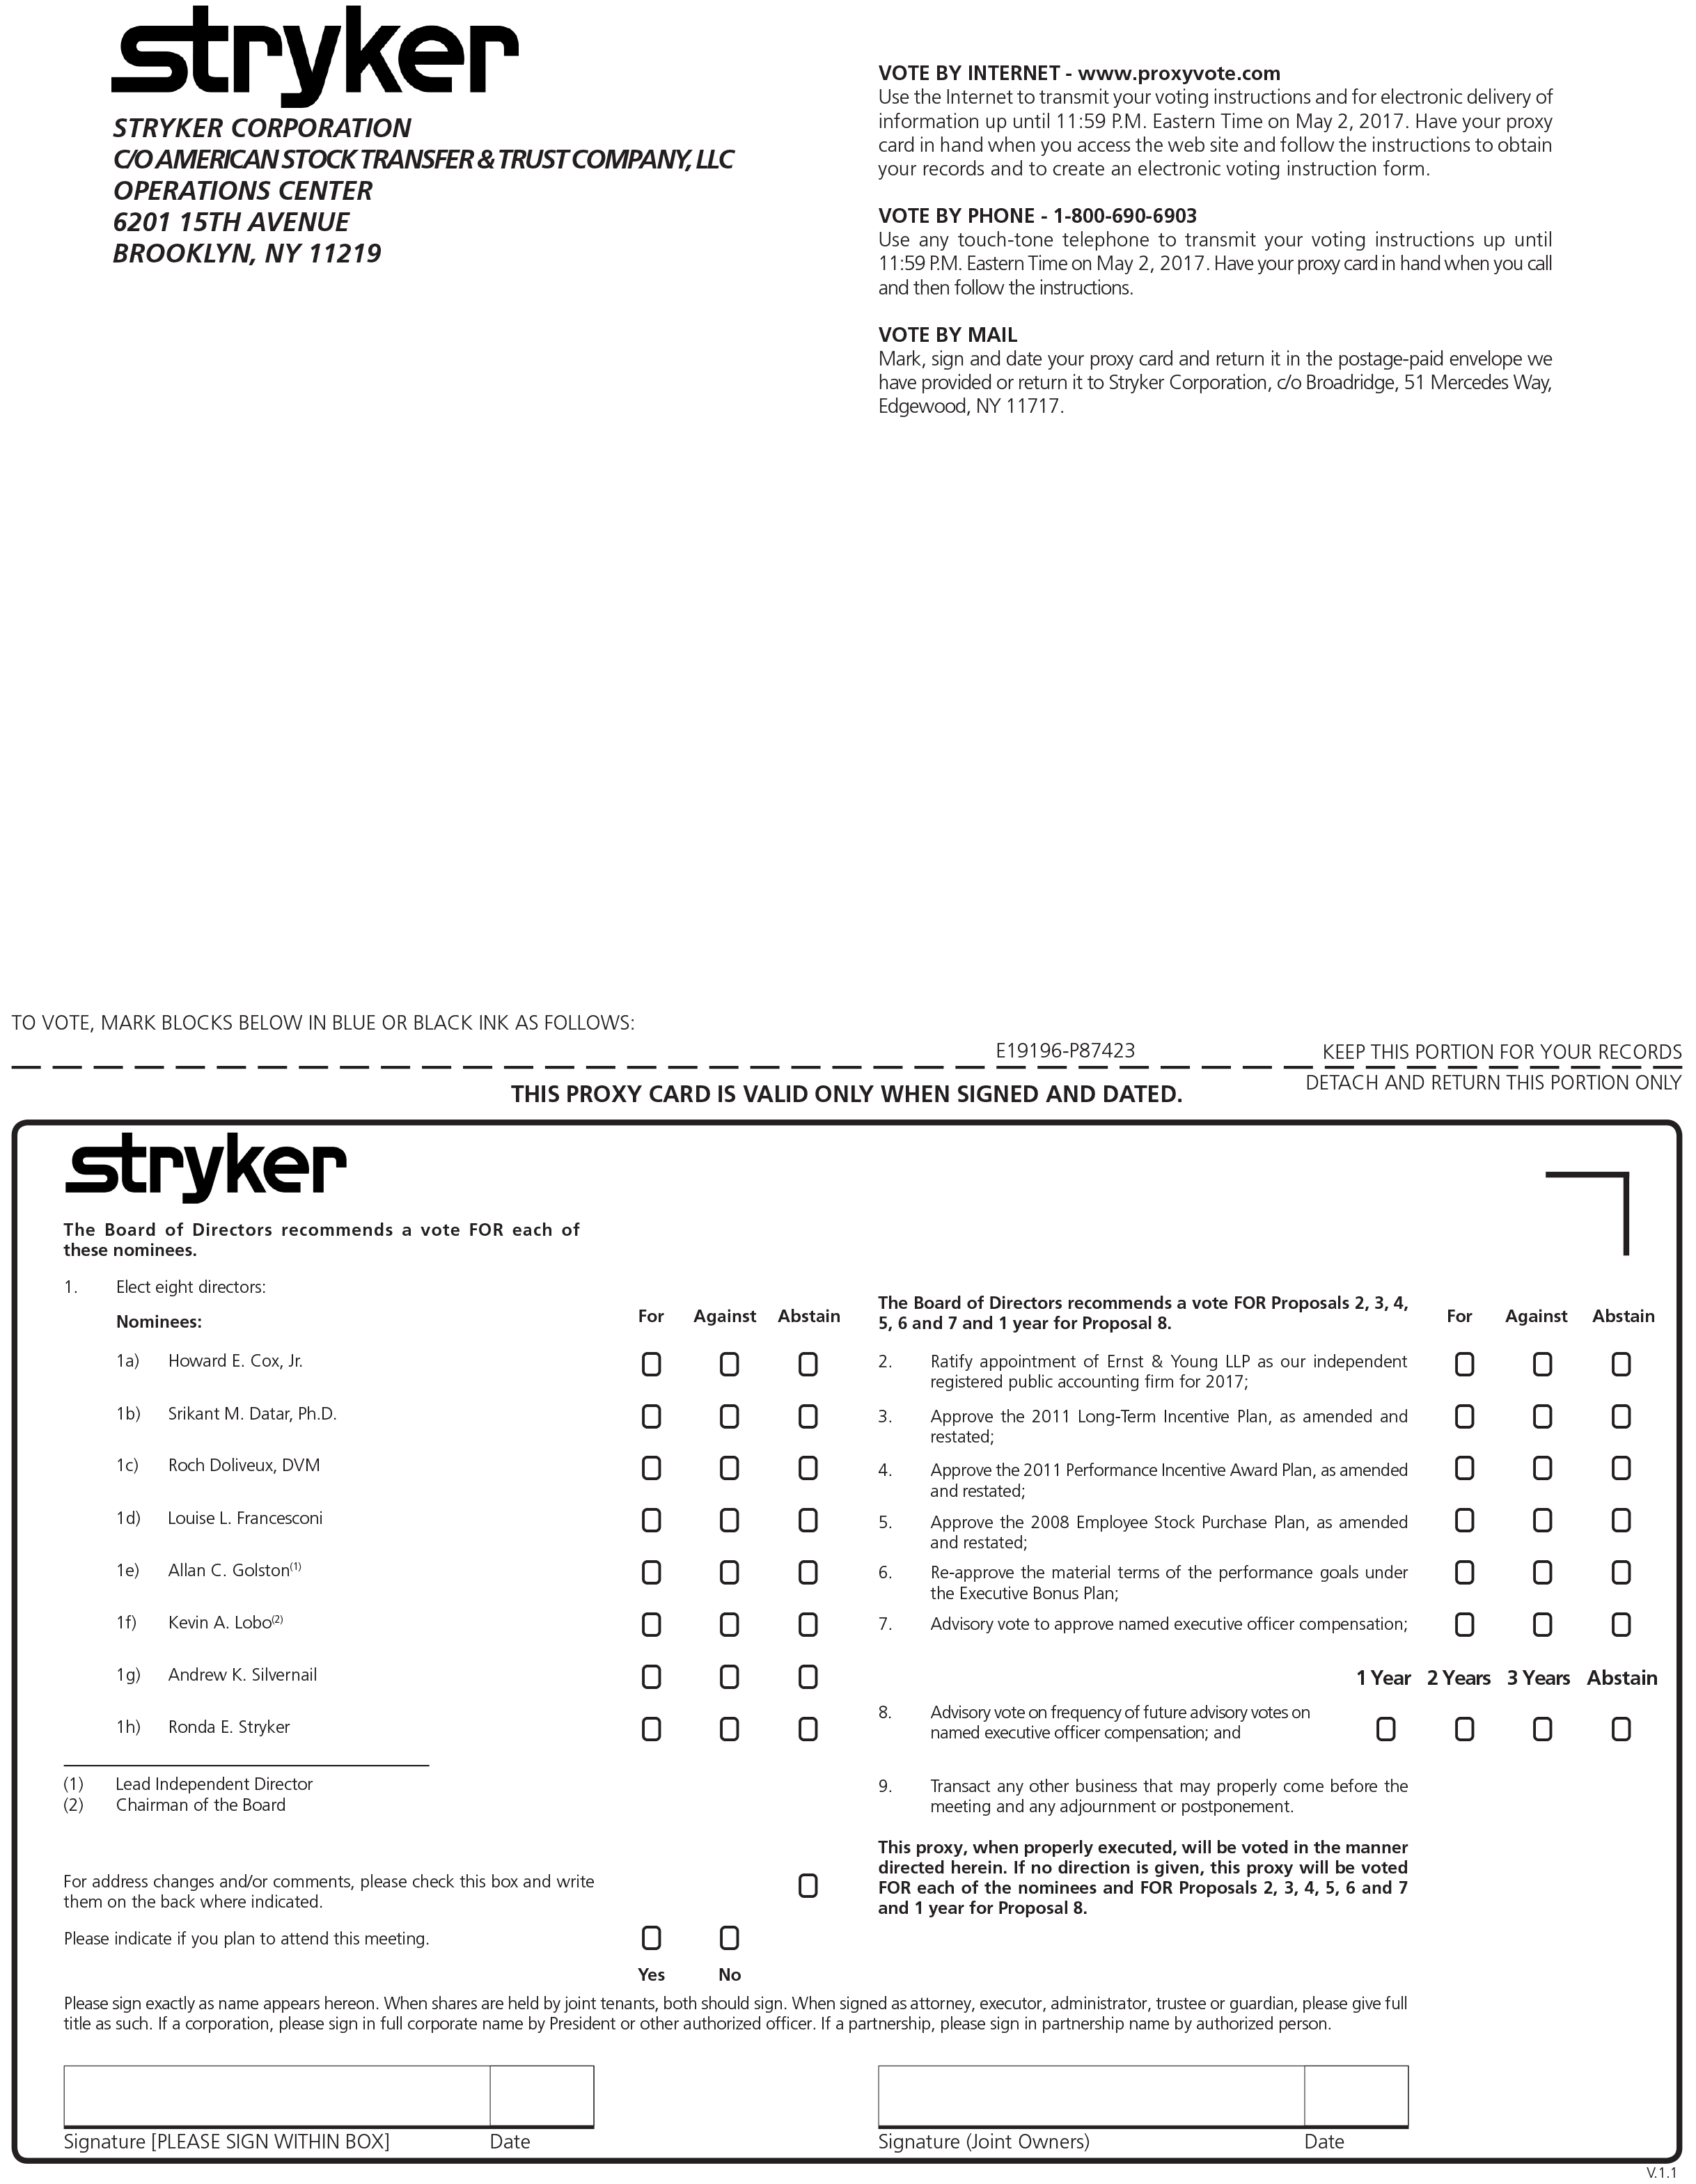 sykproxycard05.jpg